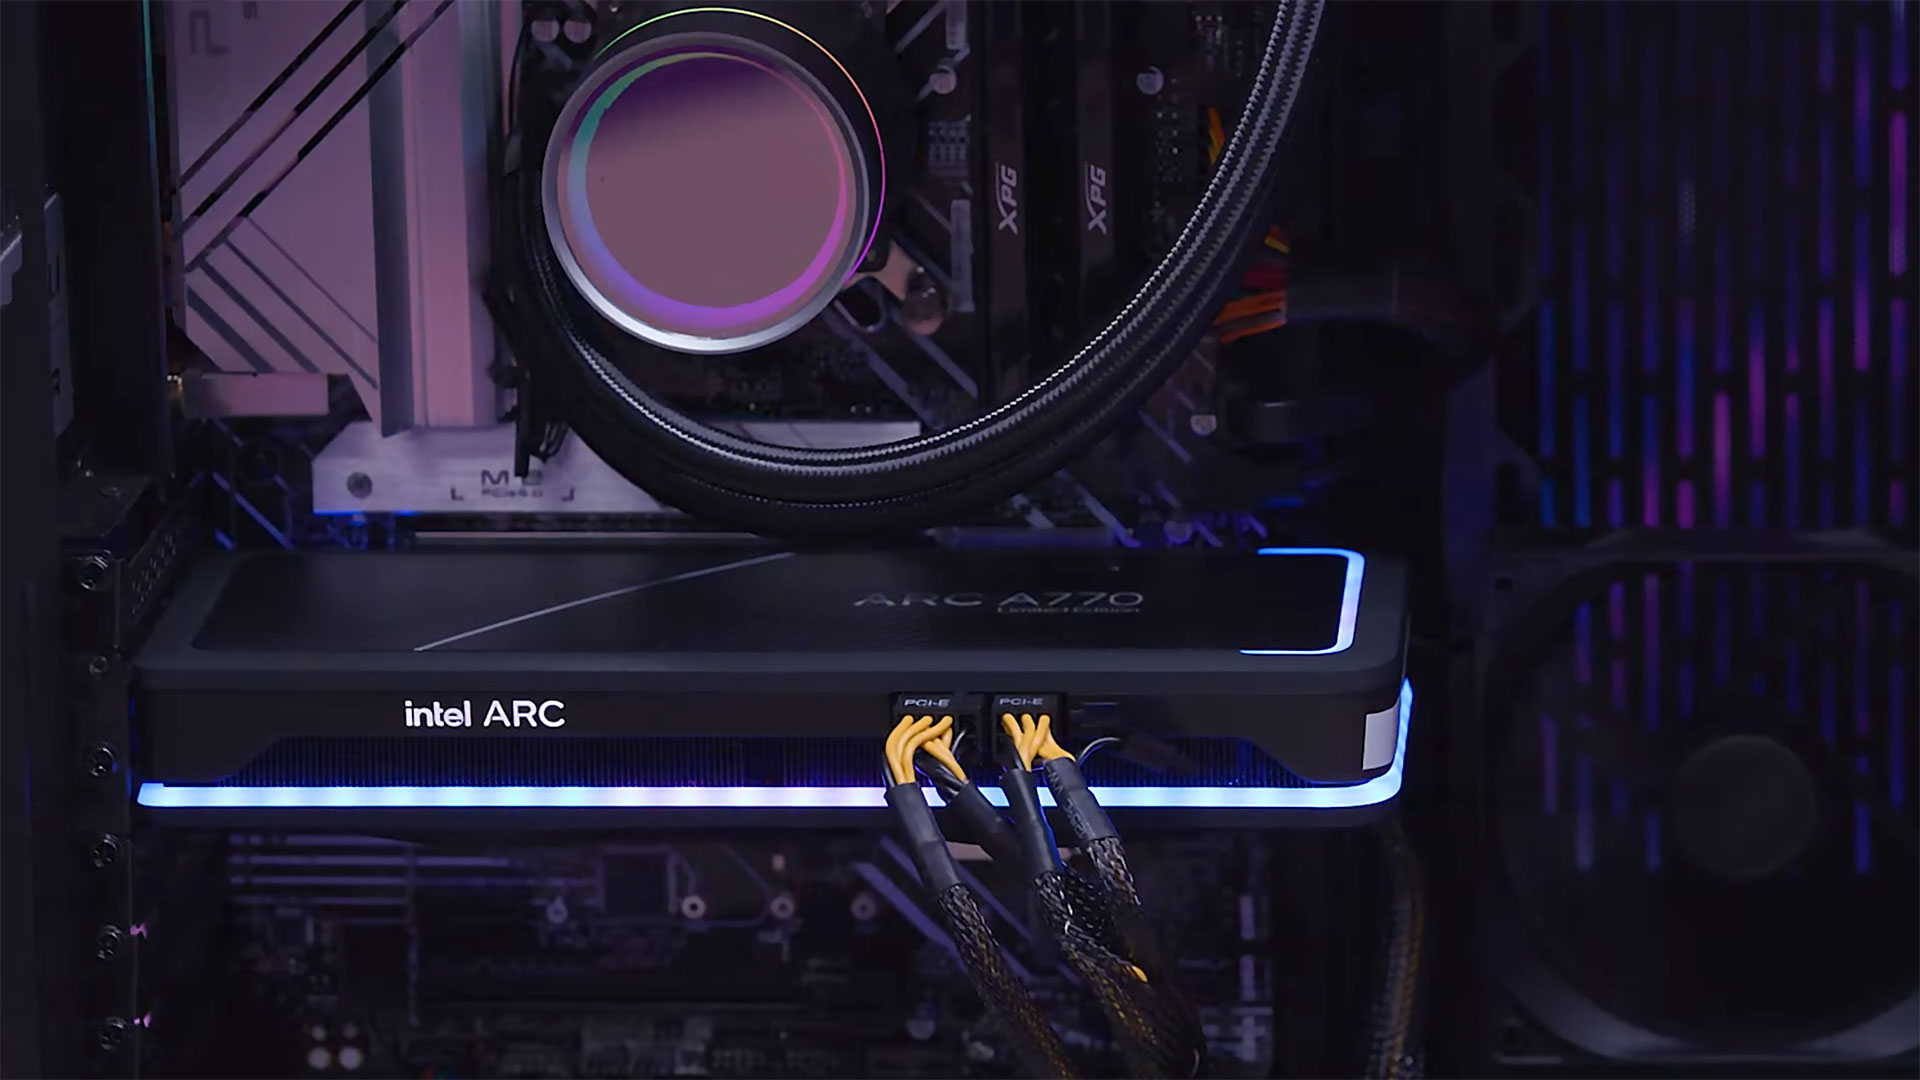 Intel Arc A770 flagship GPU demoed with 2.5 GHz clock and 190W GPU power,  OC up to 285W 